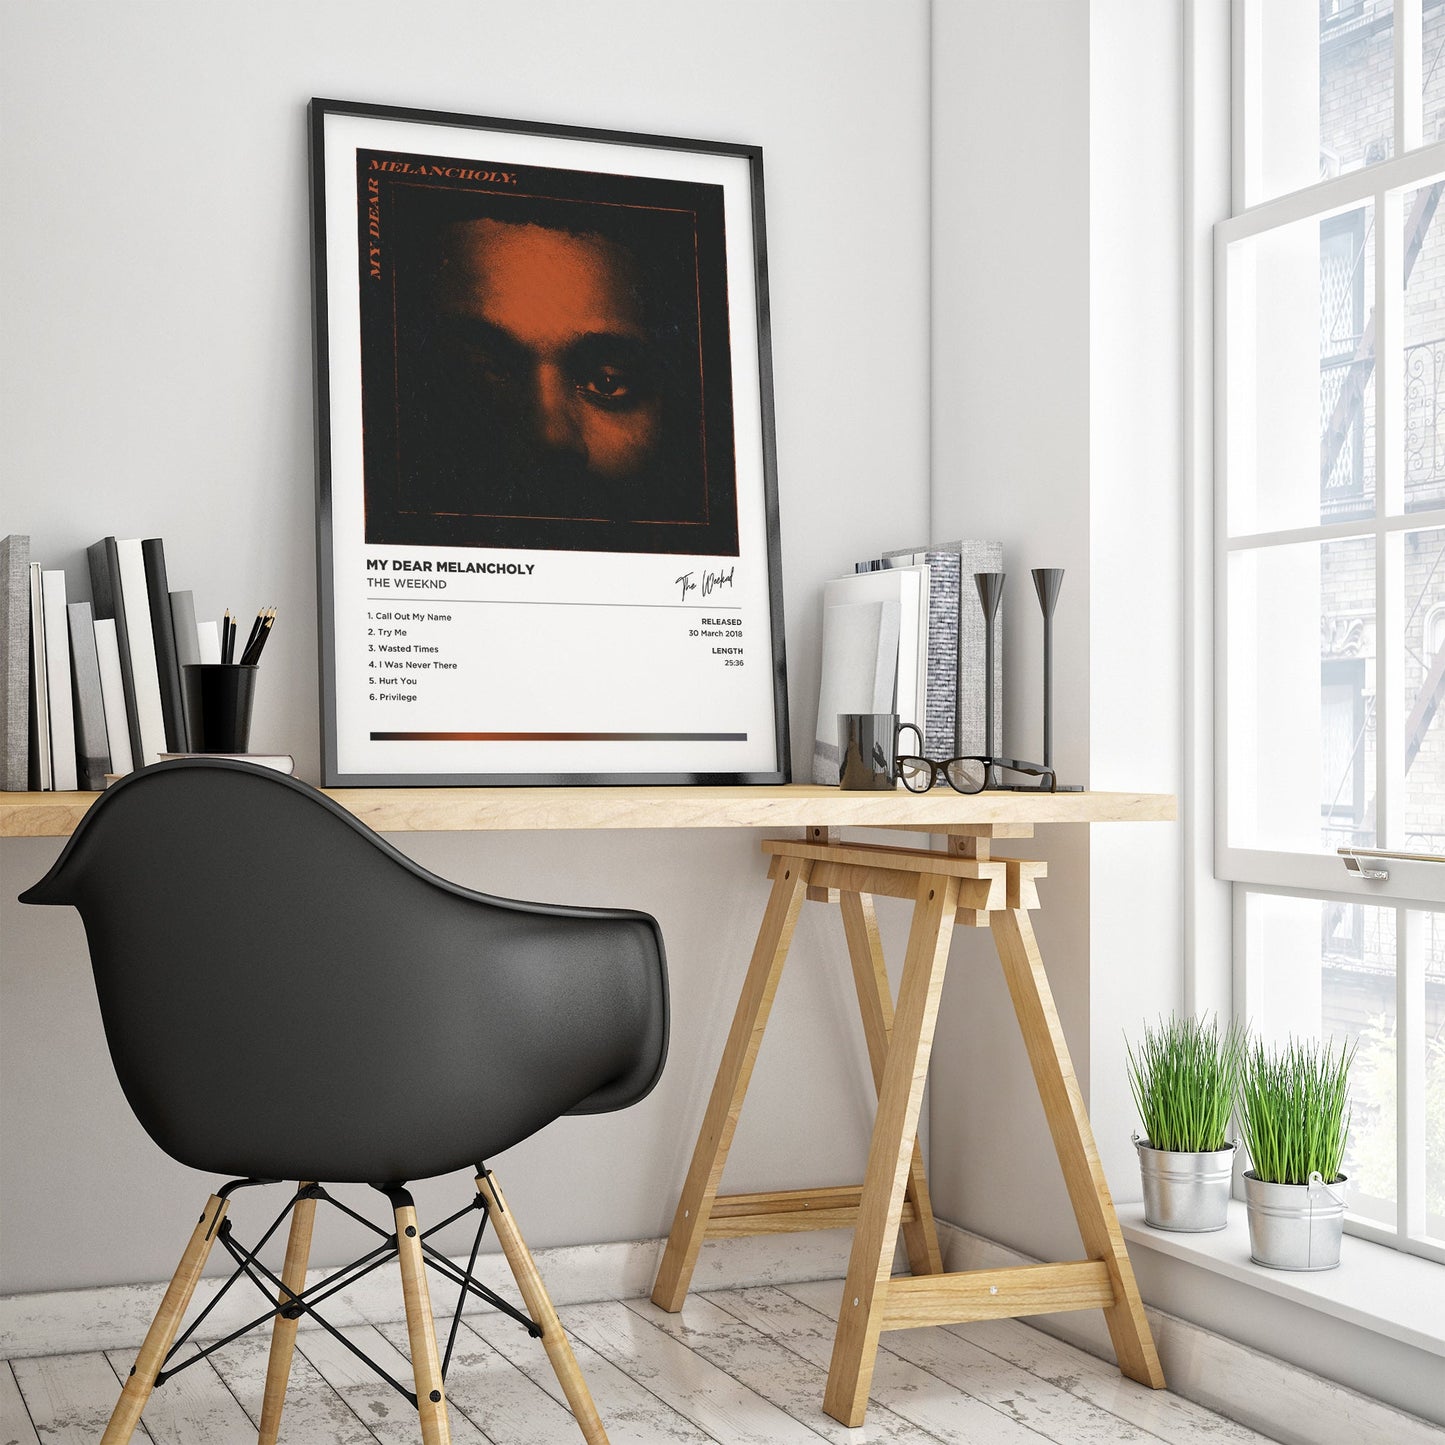 The Weeknd - My Dear Melancholy Framed Poster Print | Polaroid Style | Album Cover Artwork